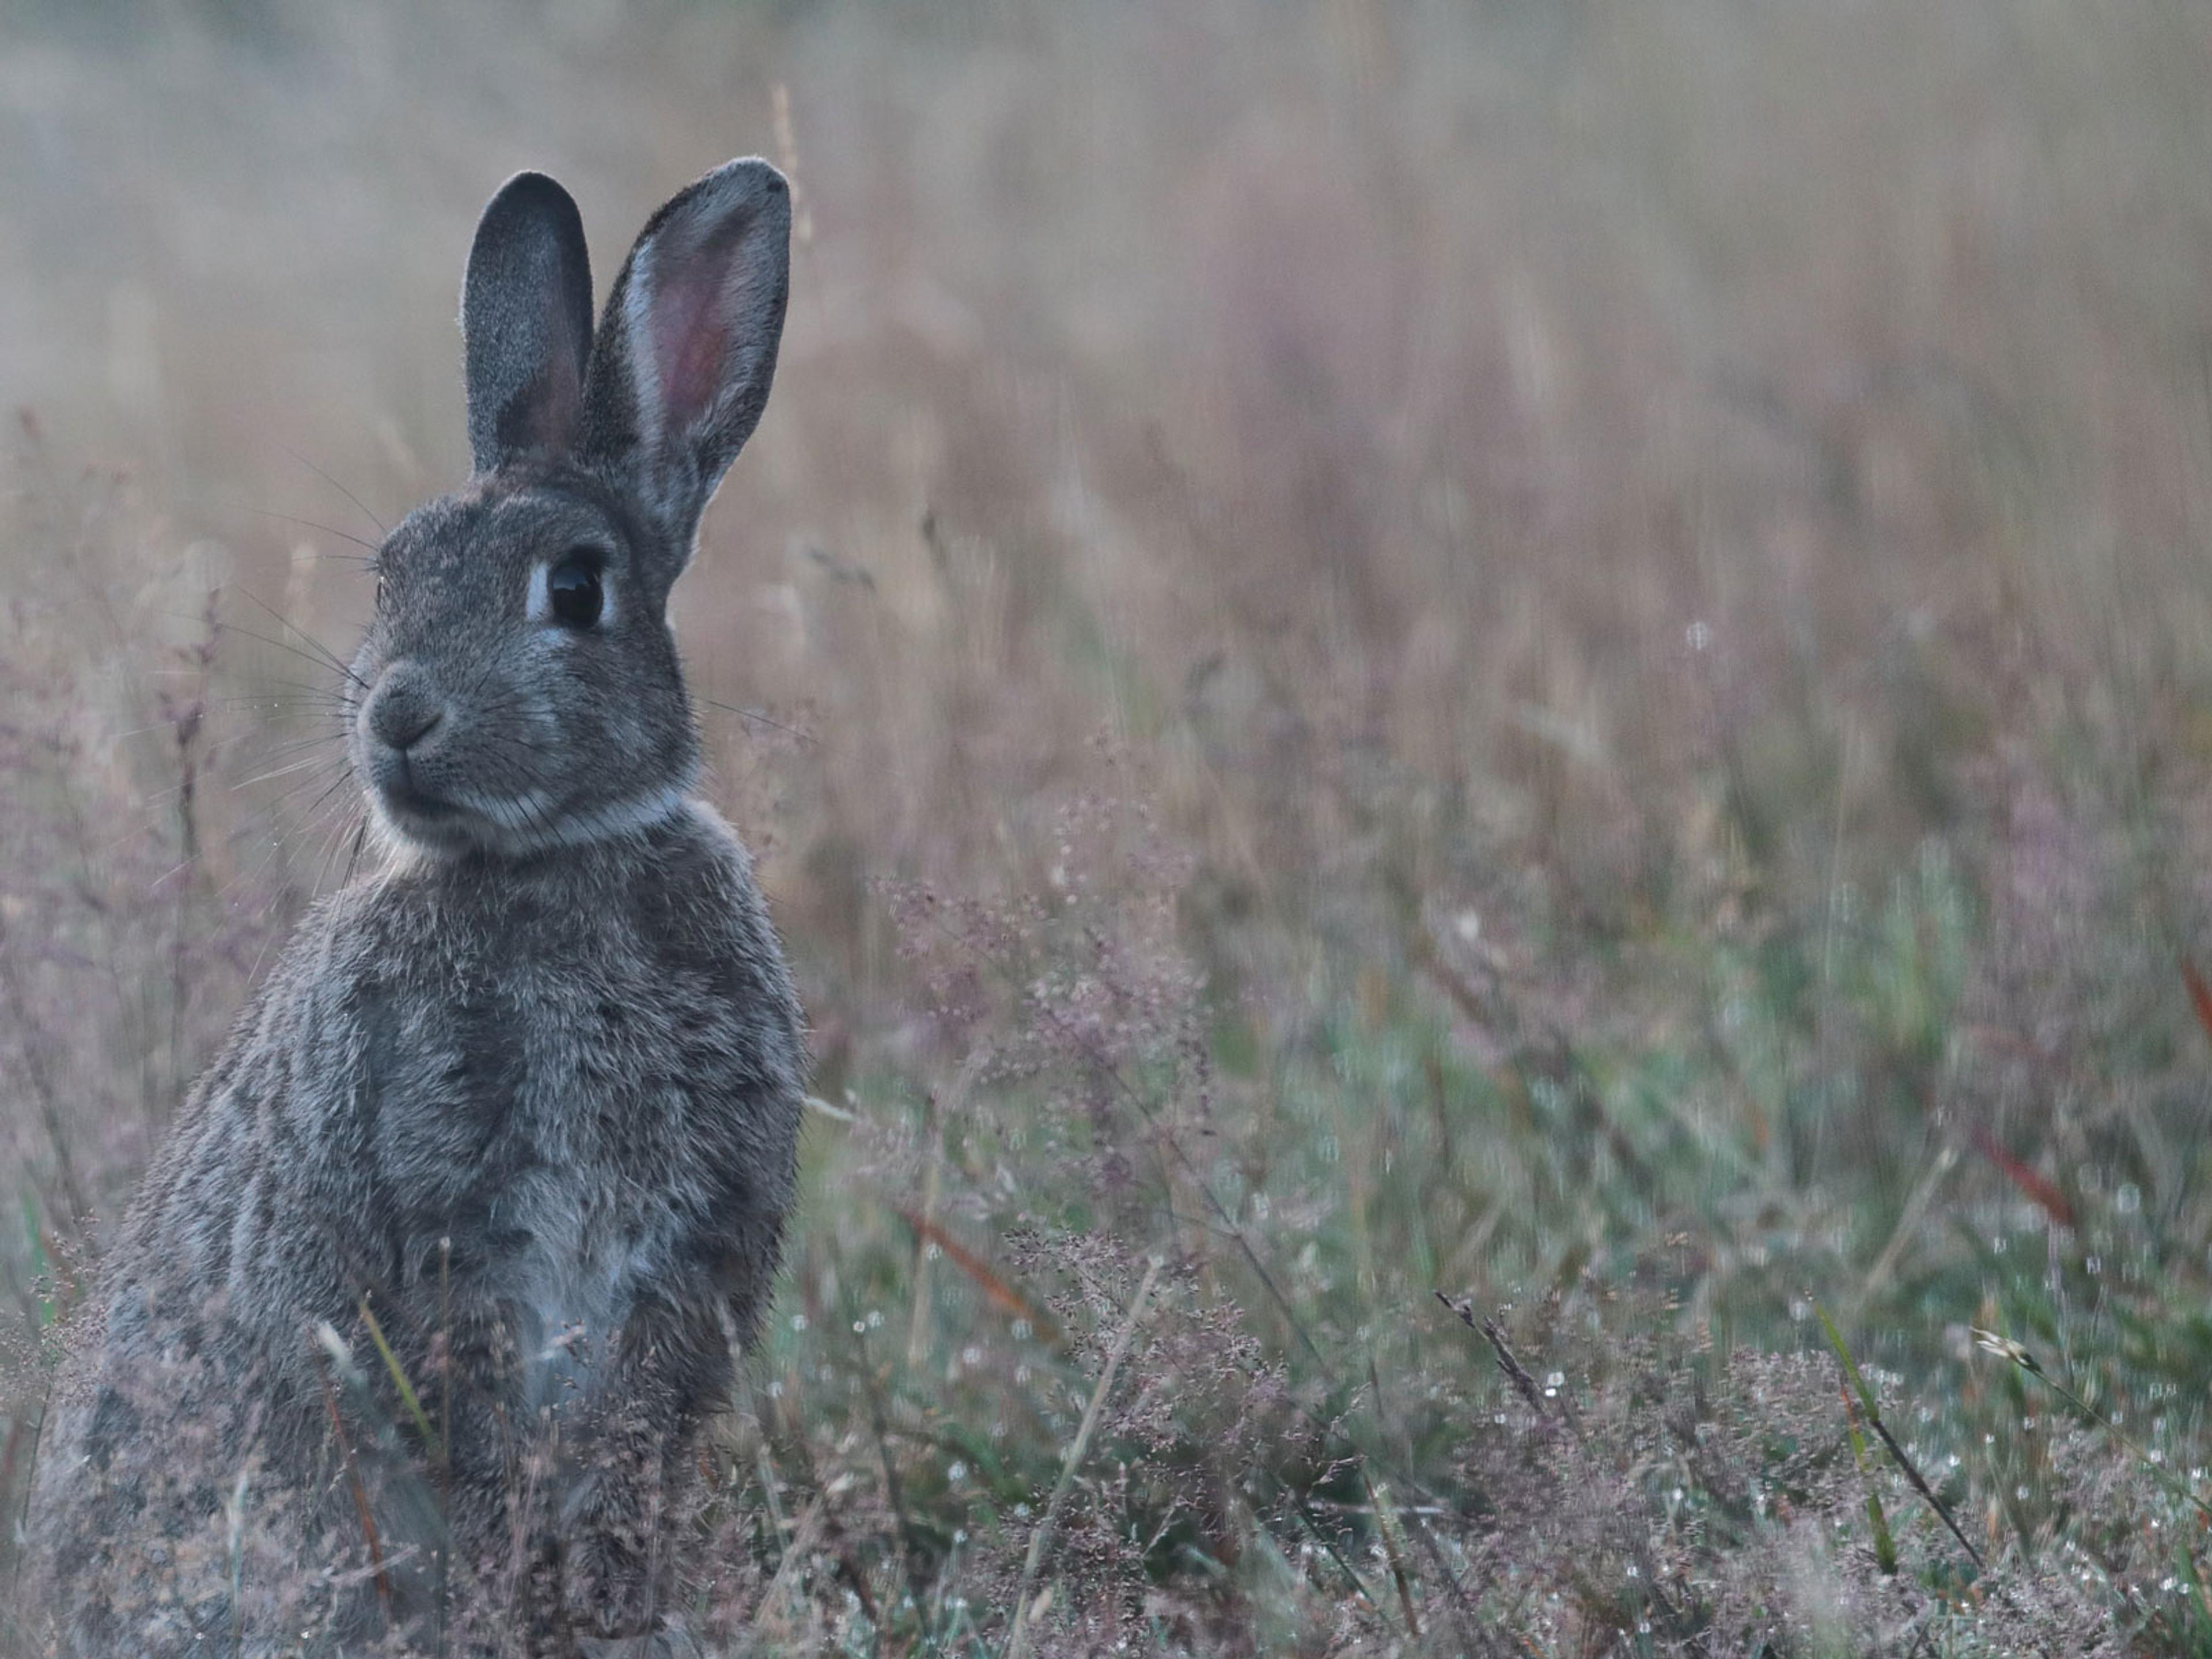 A rabbit looking alert in a field of grass.